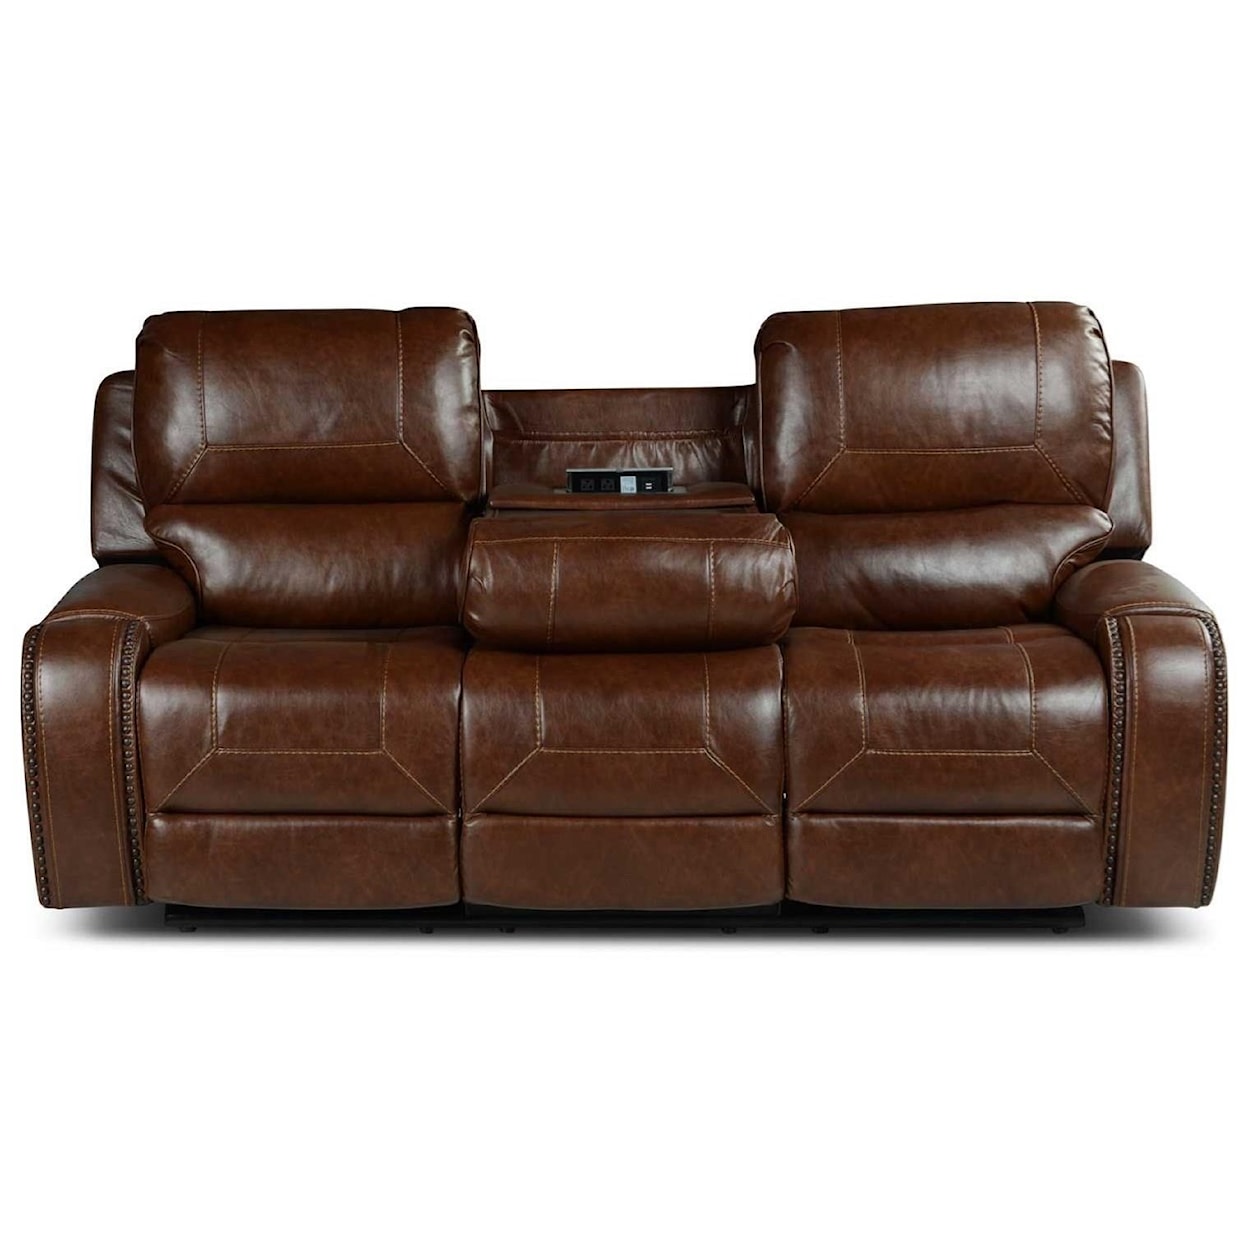 Prime Keily Manual Motion Recliner Sofa